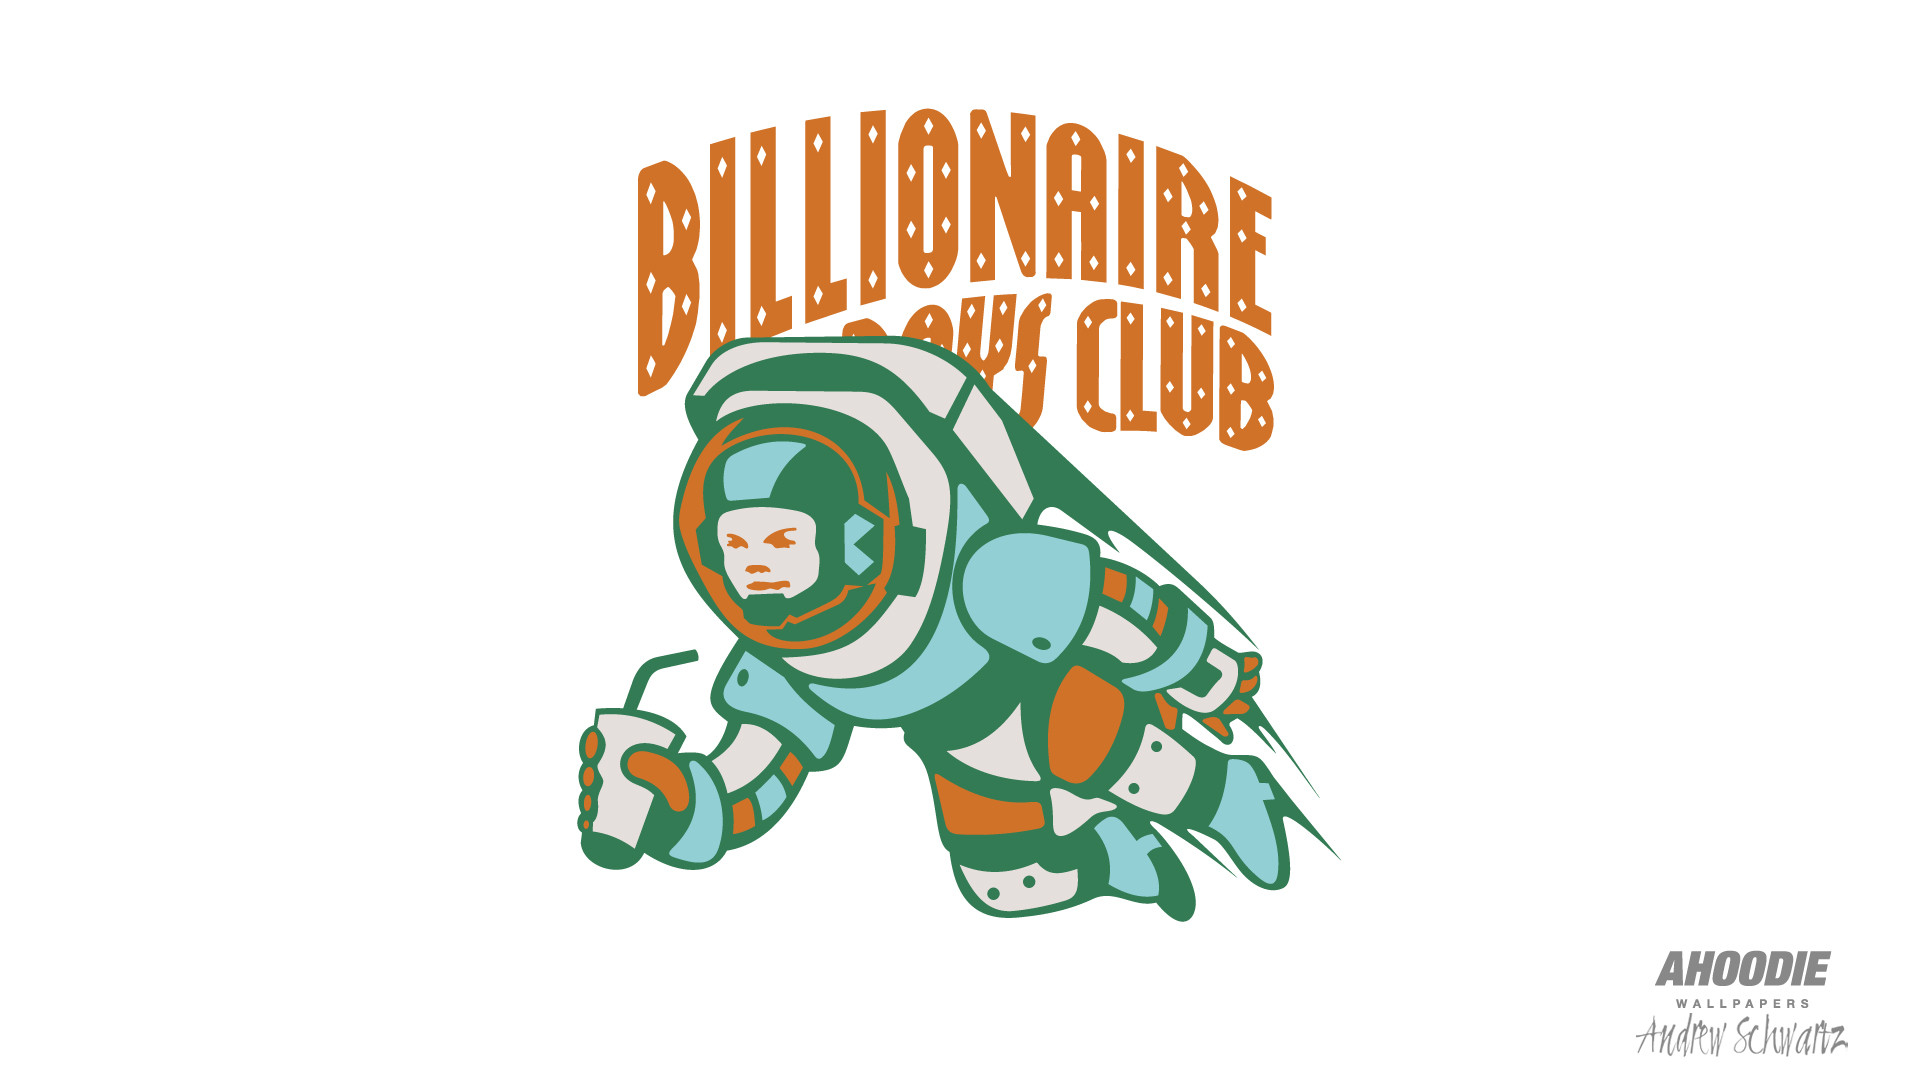 Billionaire Boys Club - Wikipedia